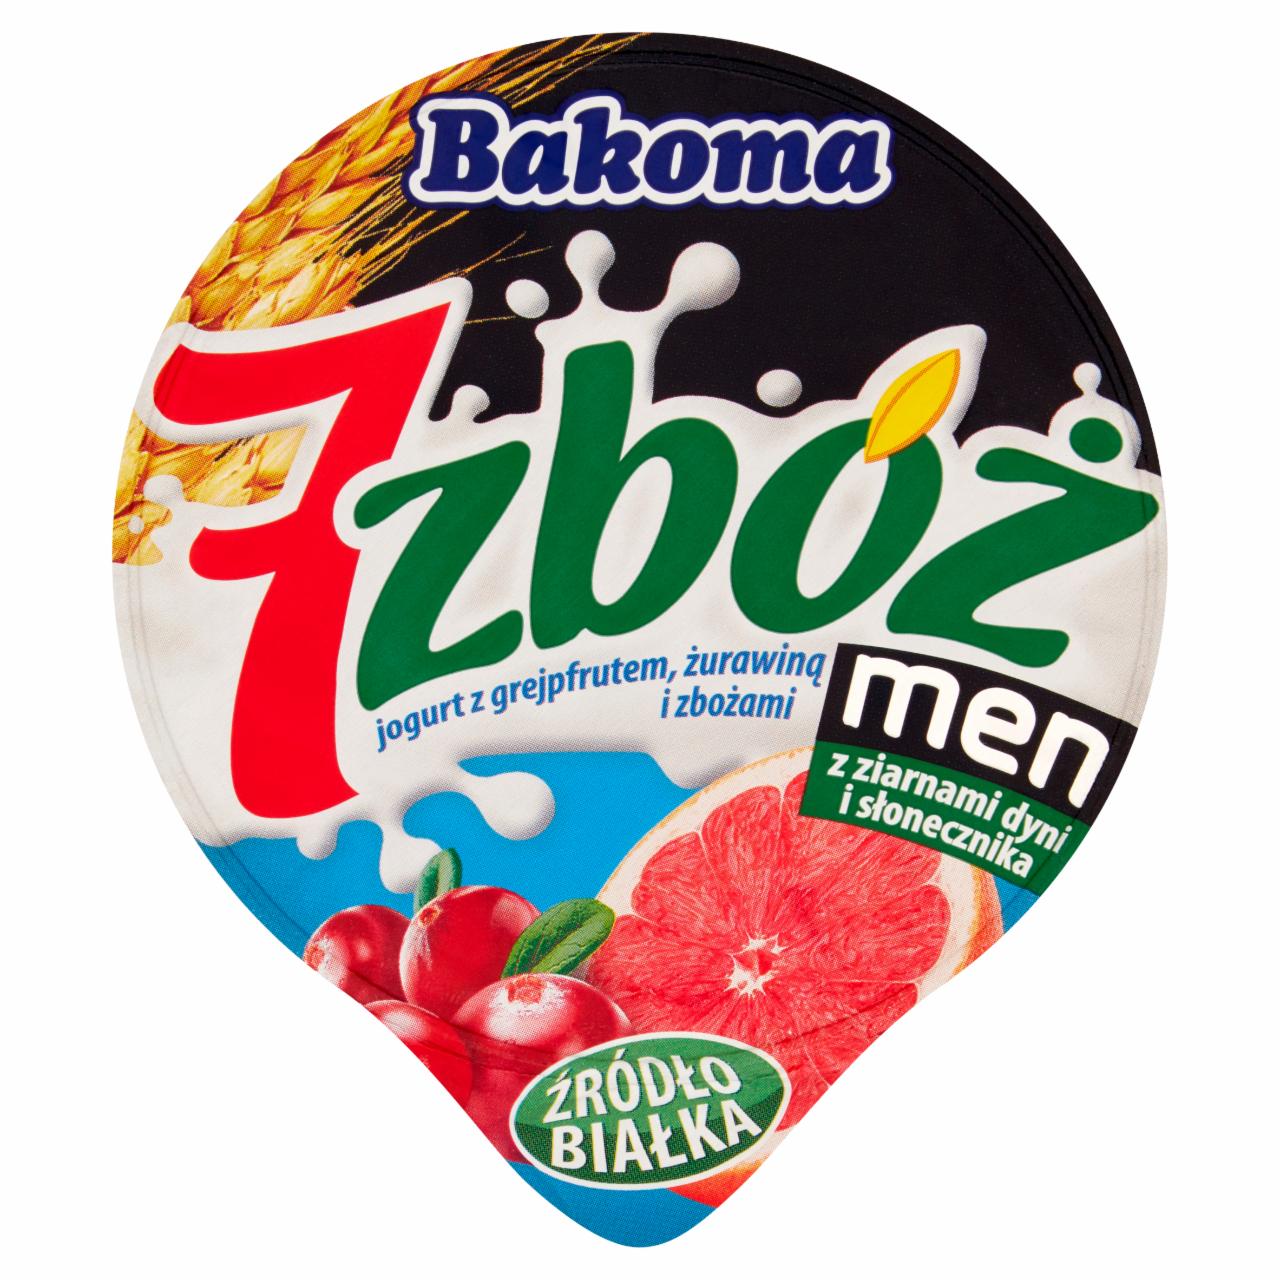 Photo - Bakoma 7 zbóż men Yoghurt with Grapefruit Cranberry and Cereal 300 g